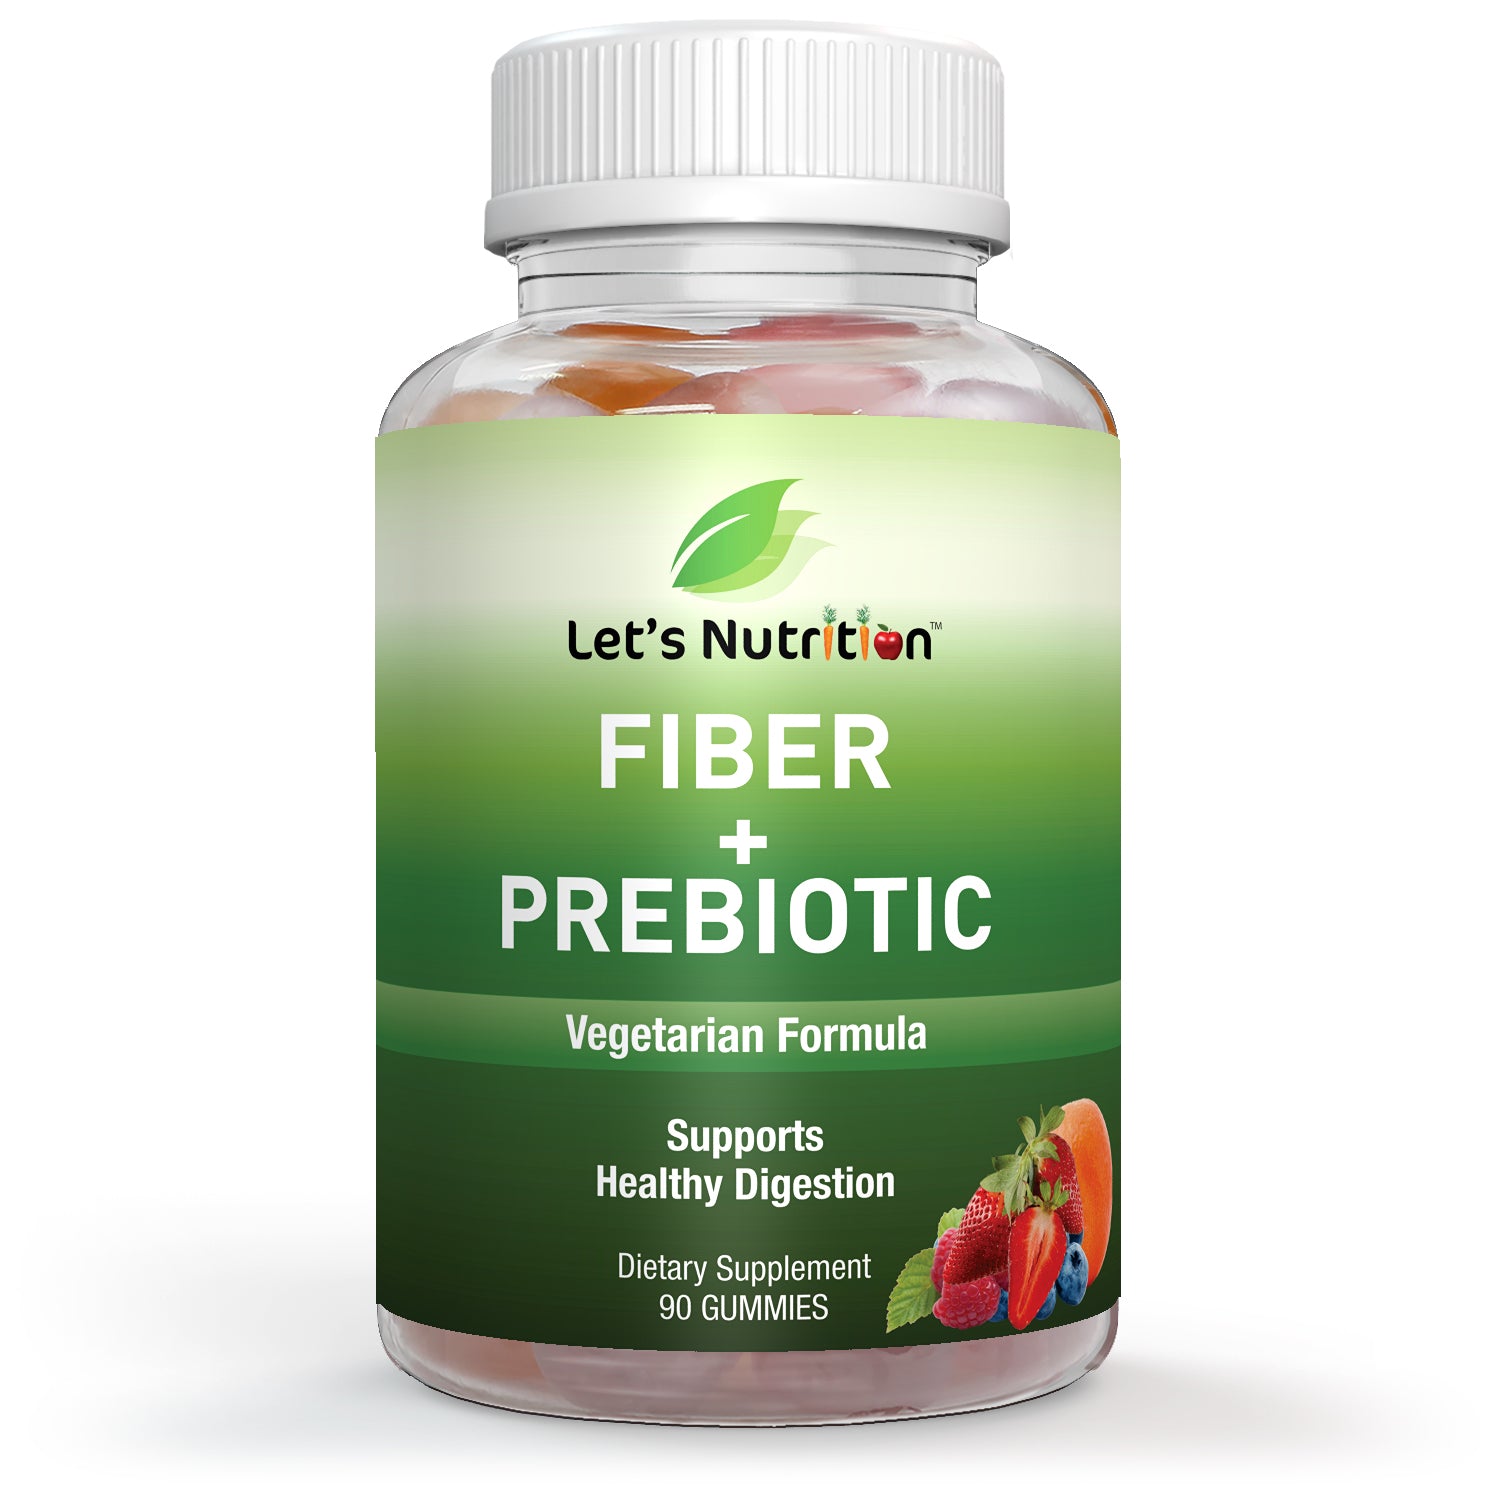 Fiber Choice Daily Prebiotic Fruity Bites (Label)